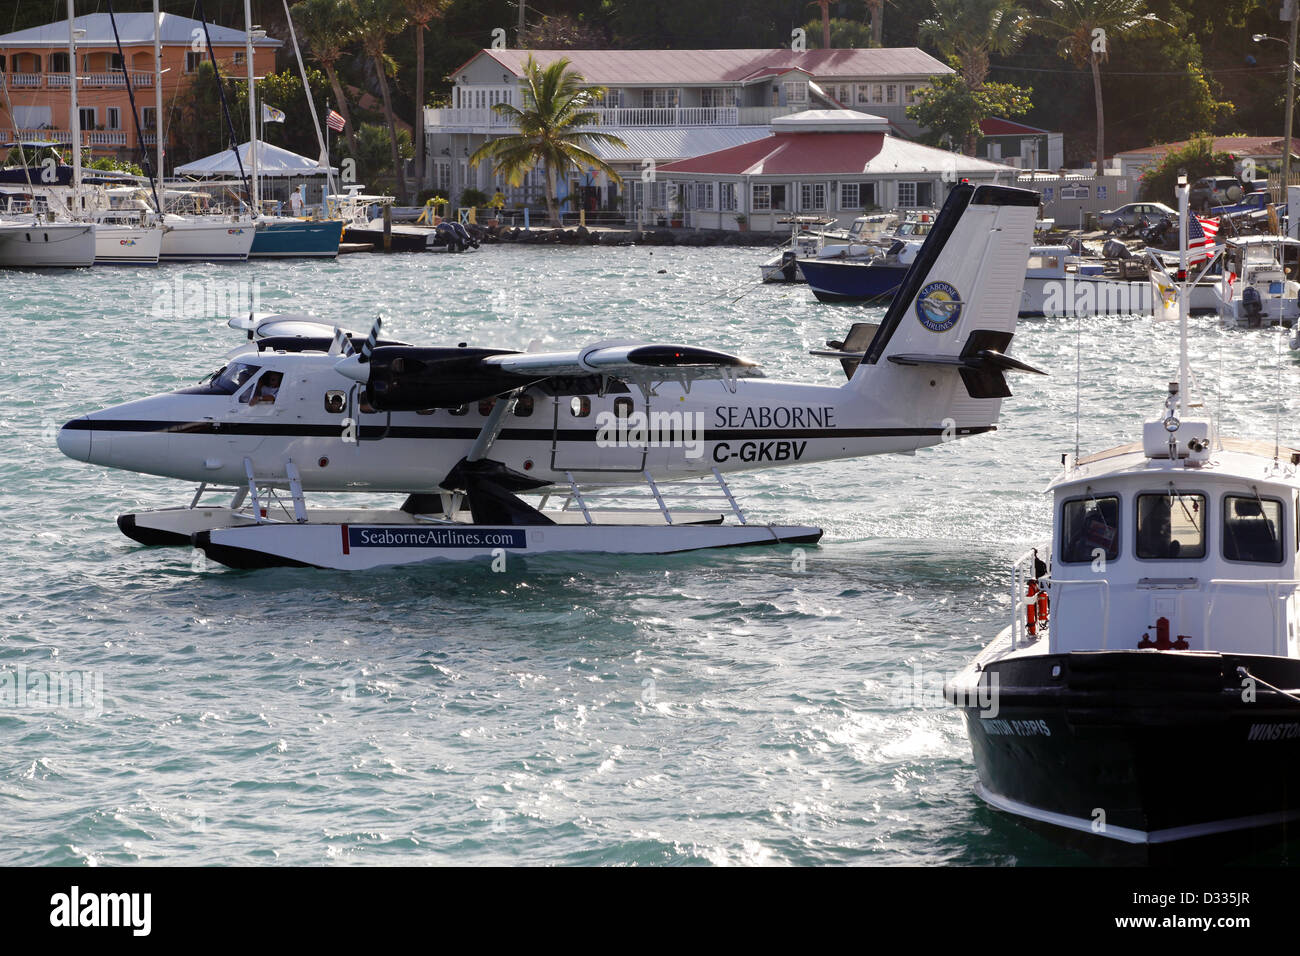 Seaborne Airlines hydravion, Charlotte Amalie, St Thomas, Virgin Islands, Caribbean Banque D'Images